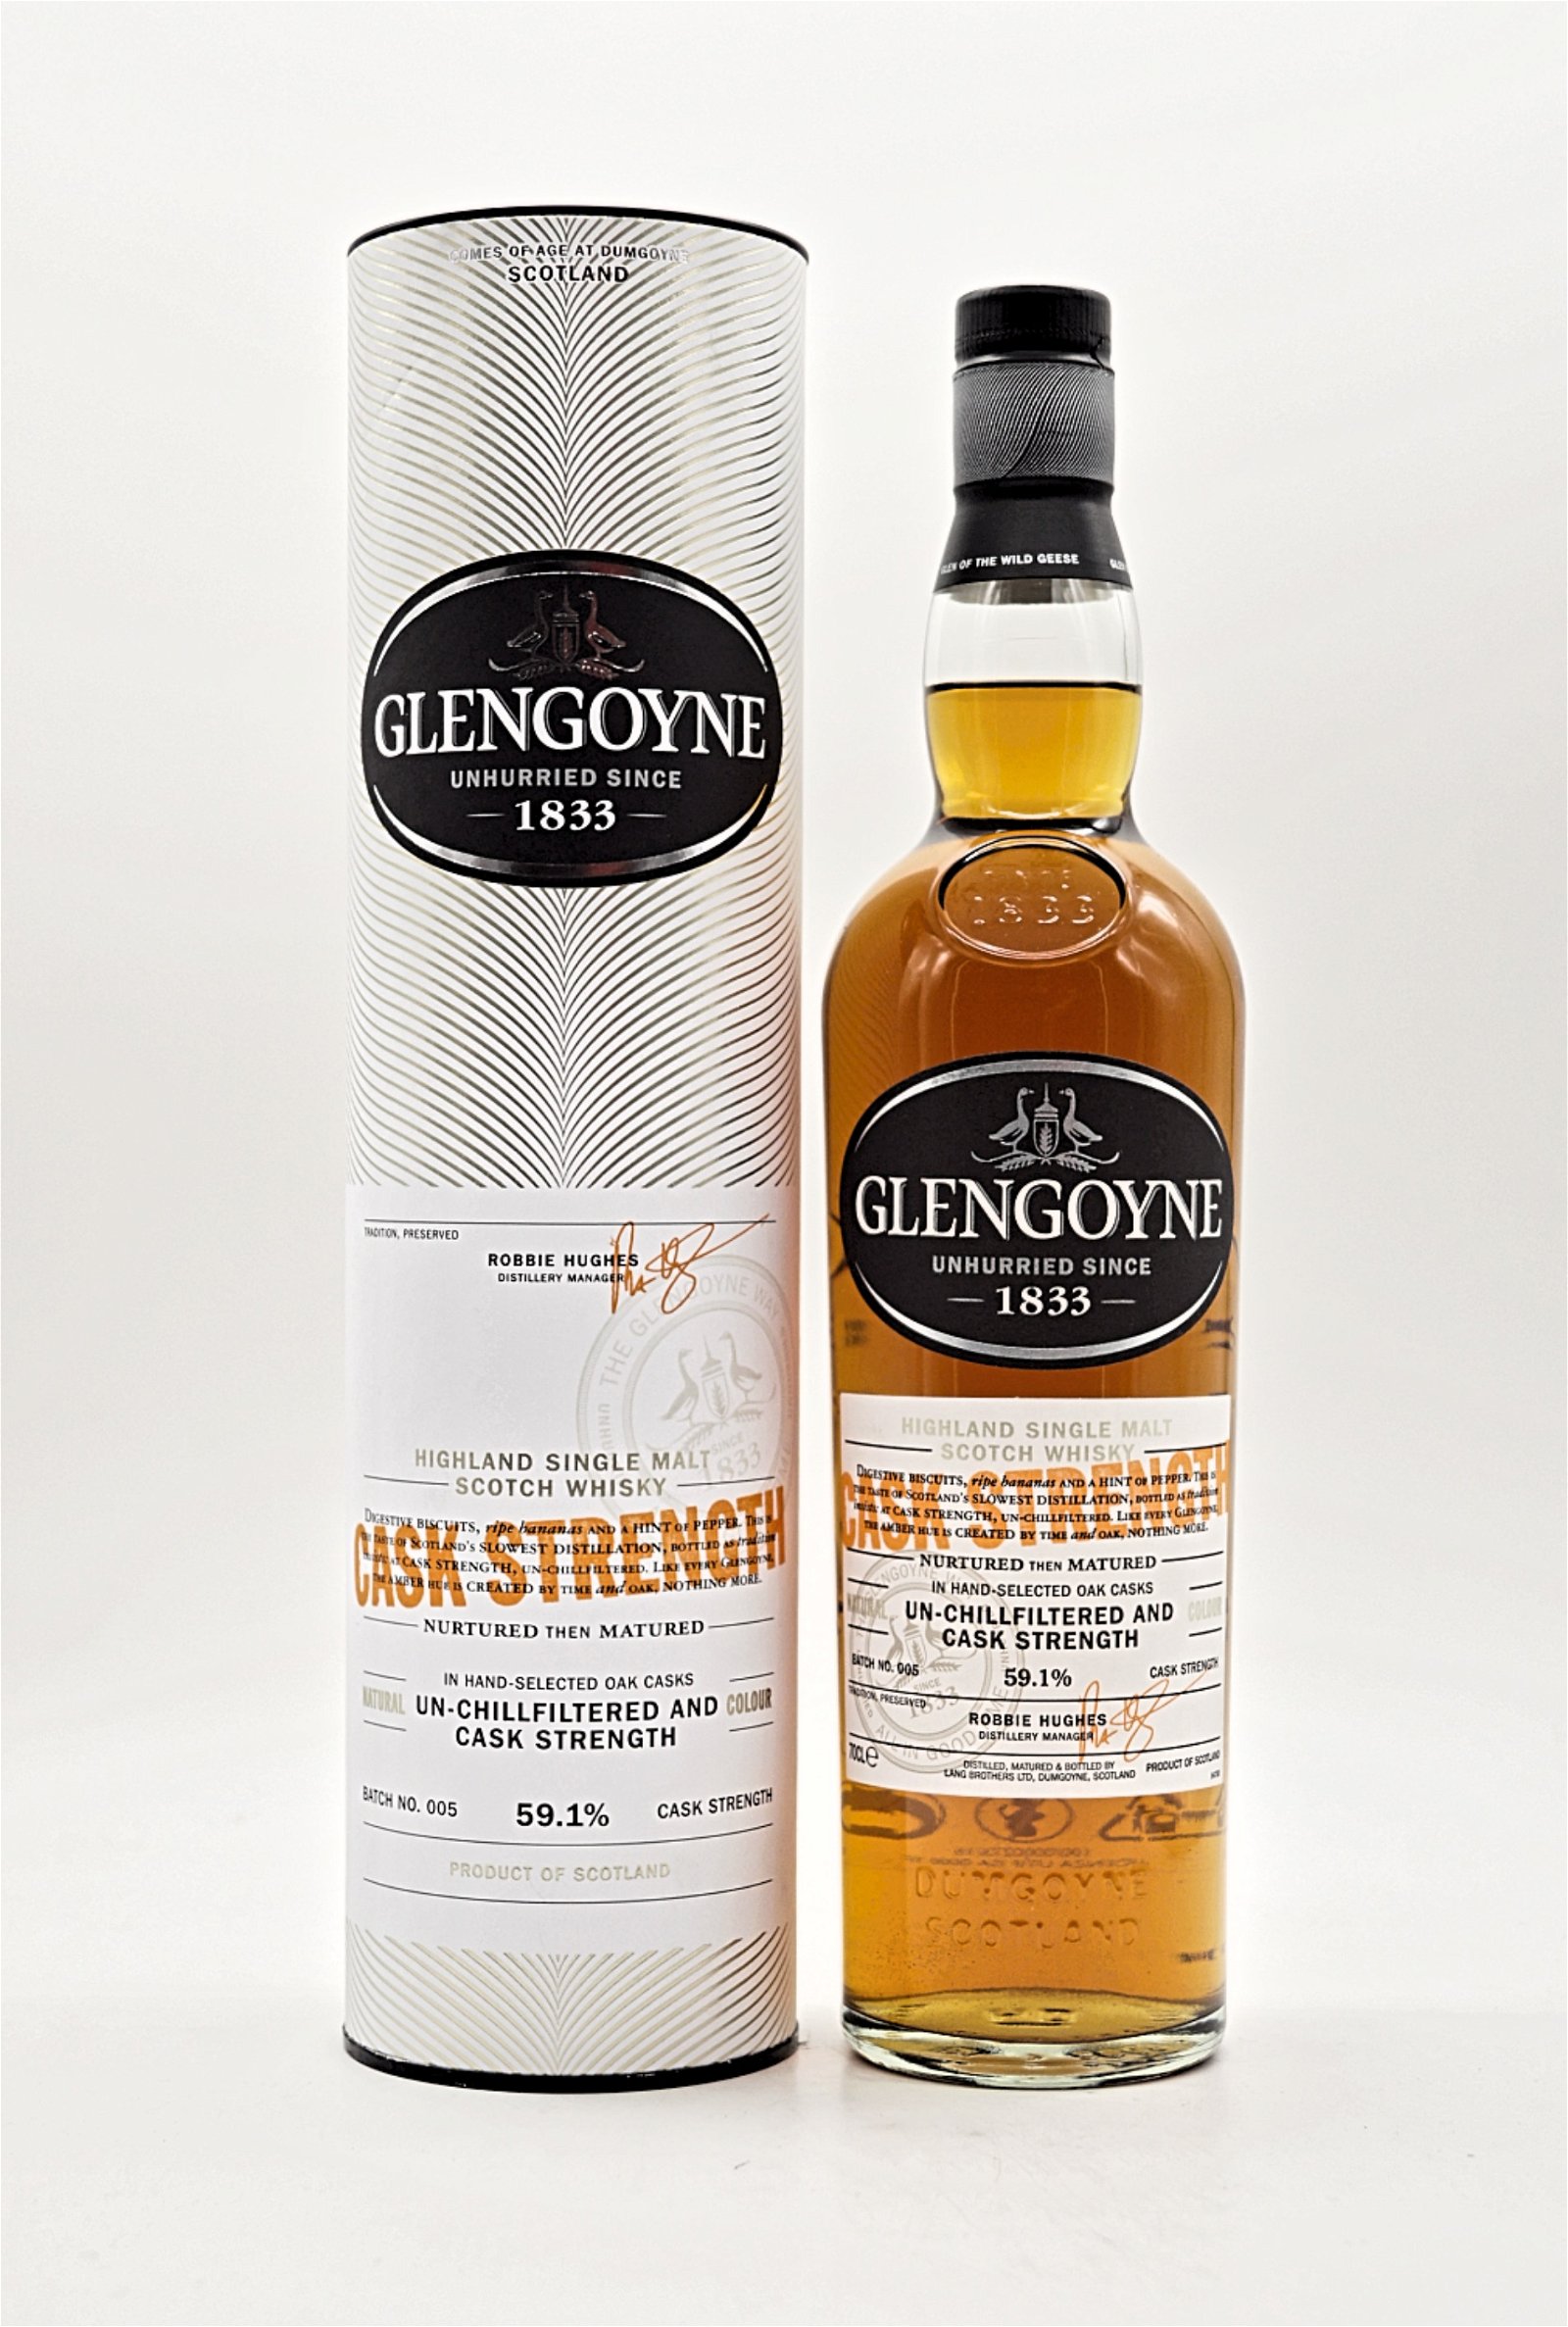 Glengoyne Un-Chillfiltered and Cask Strength Highland Single Malt Scotch Whisky